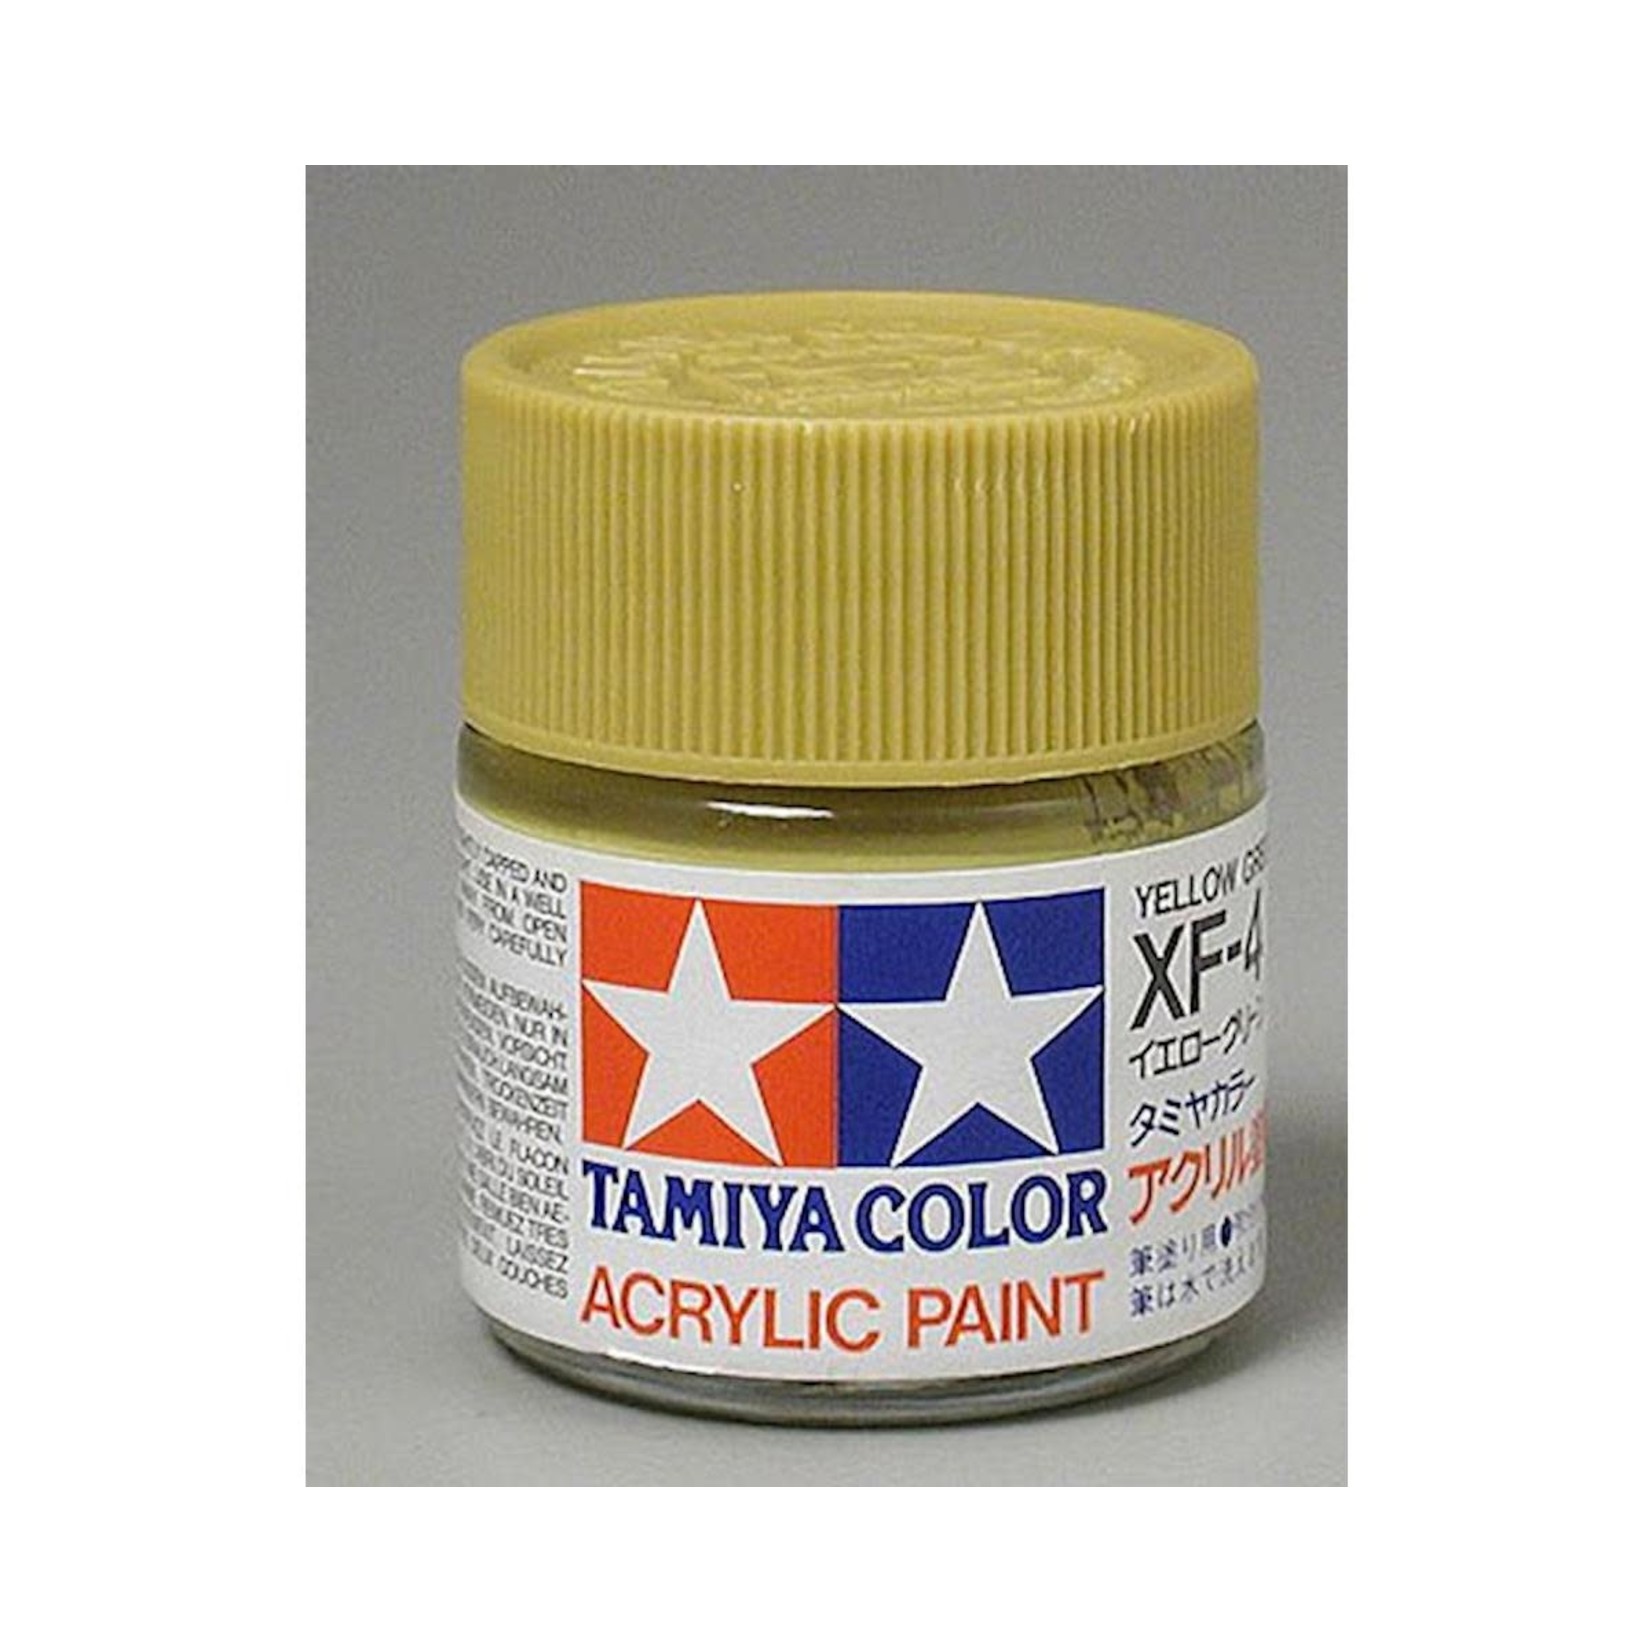 Tamiya Tamiya XF-4 Flat Yellow Green Acrylic Paint (23ml) #81304